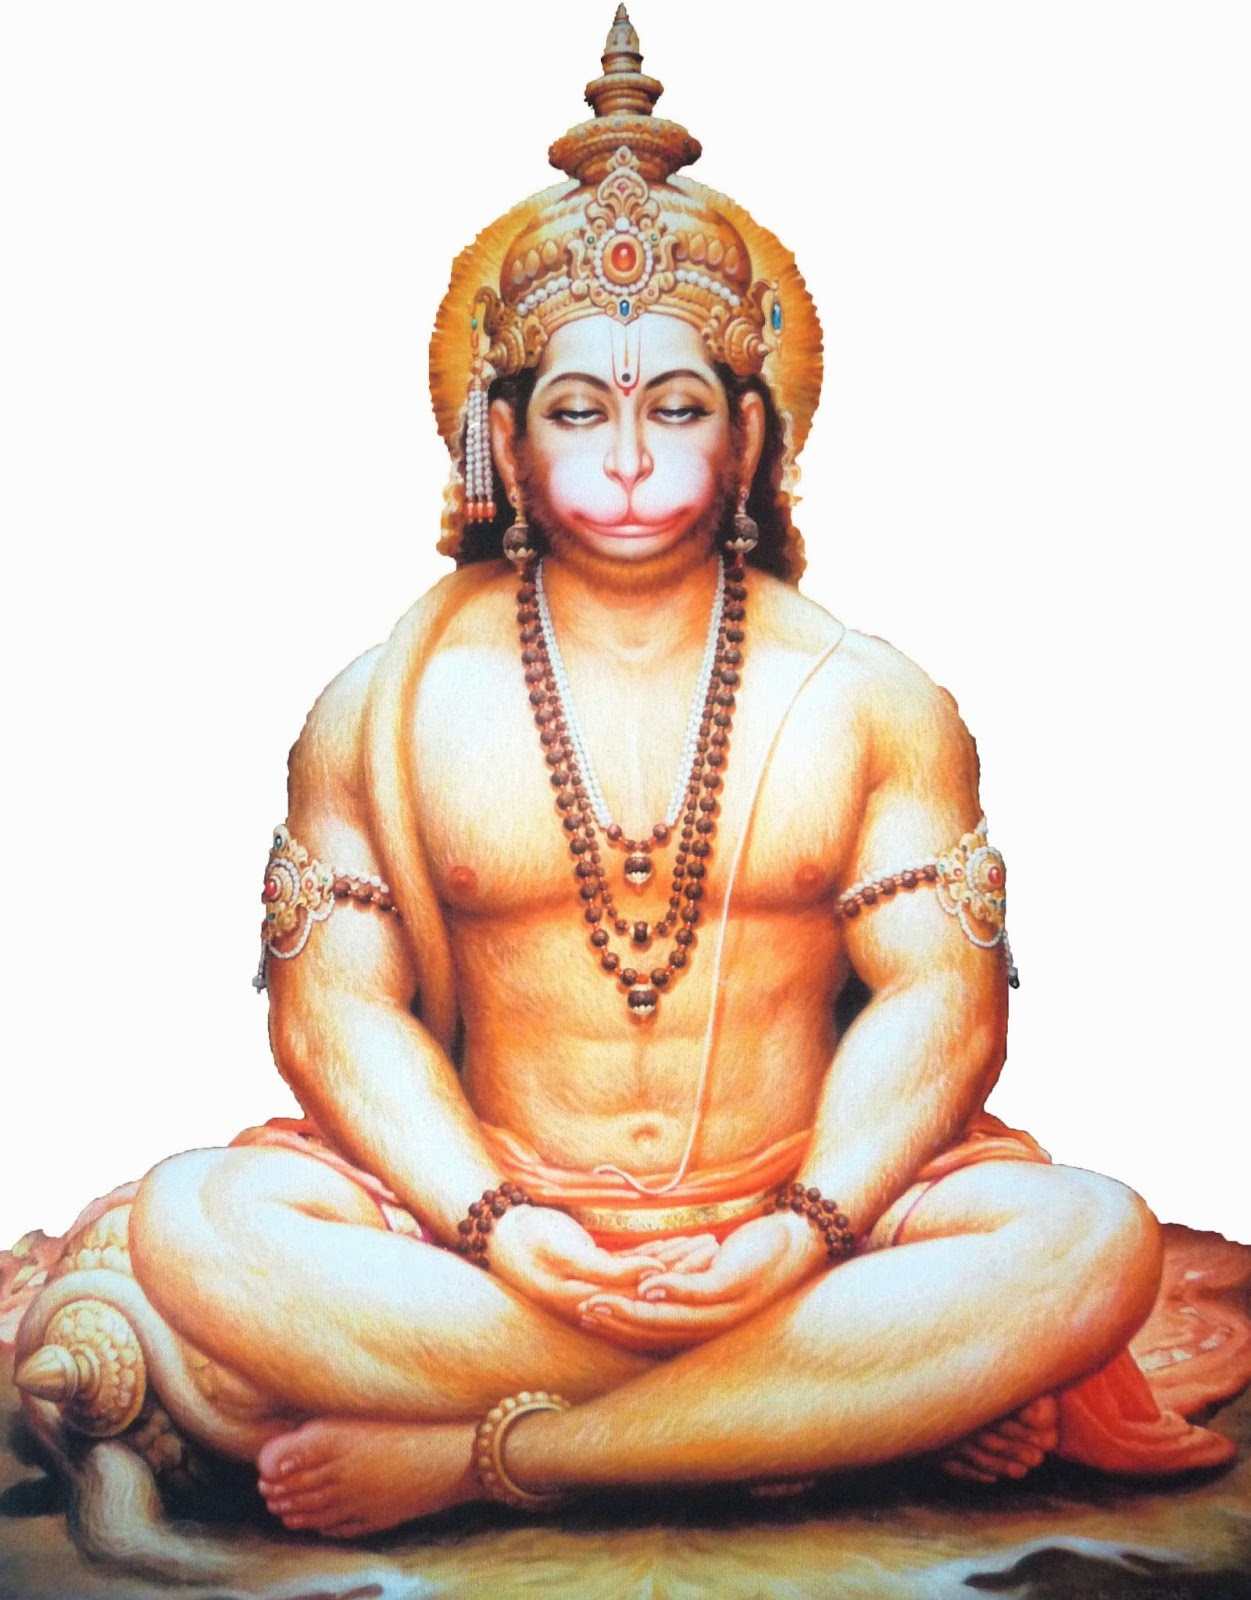 Lord Jai Hanuman Meditation photos HD wallpapers Images Pictures Gallery Free  Download | Hindu God Image 